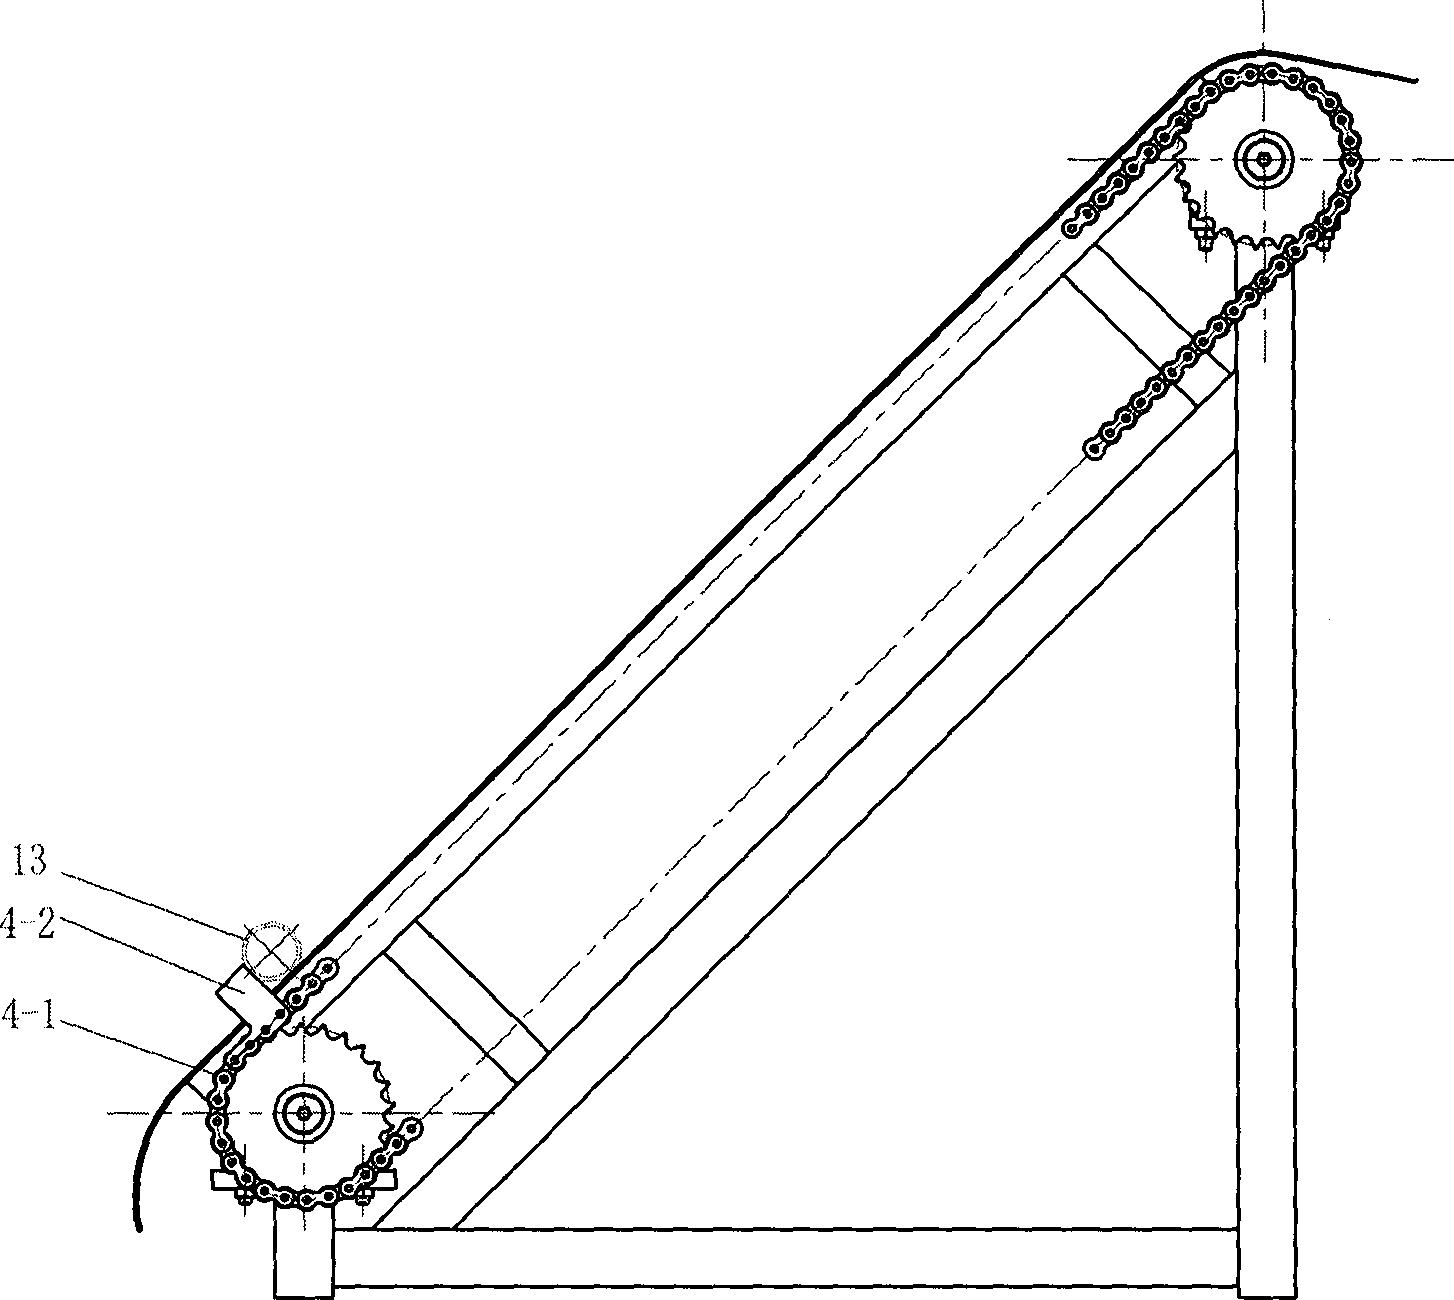 Novel numerical control bamboo splitting machine